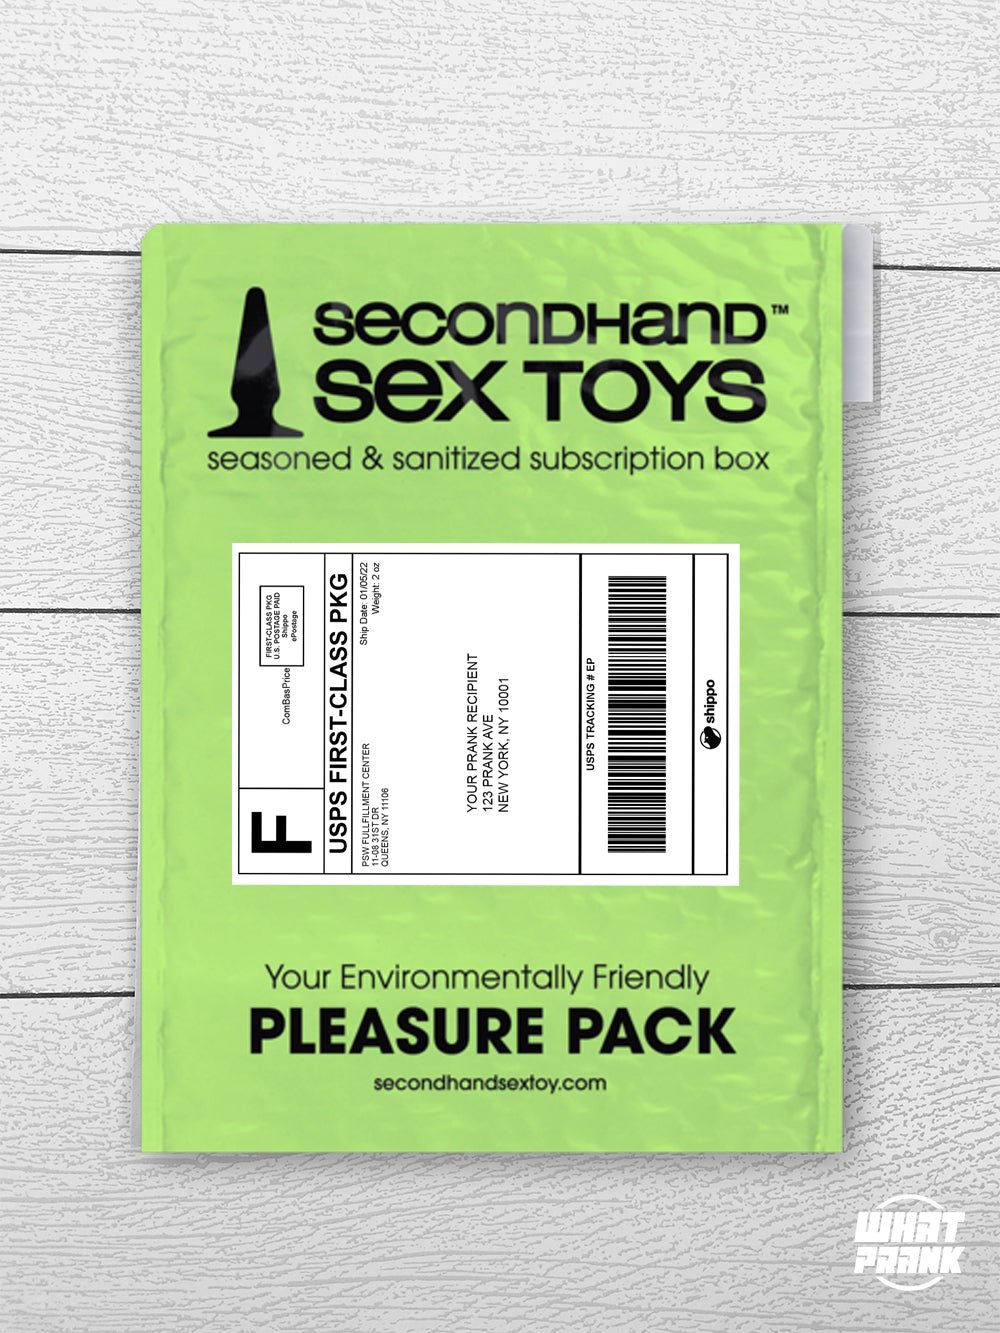 Secondhand Sex Toys Mail Prank |  | Mail Prank | What Prank